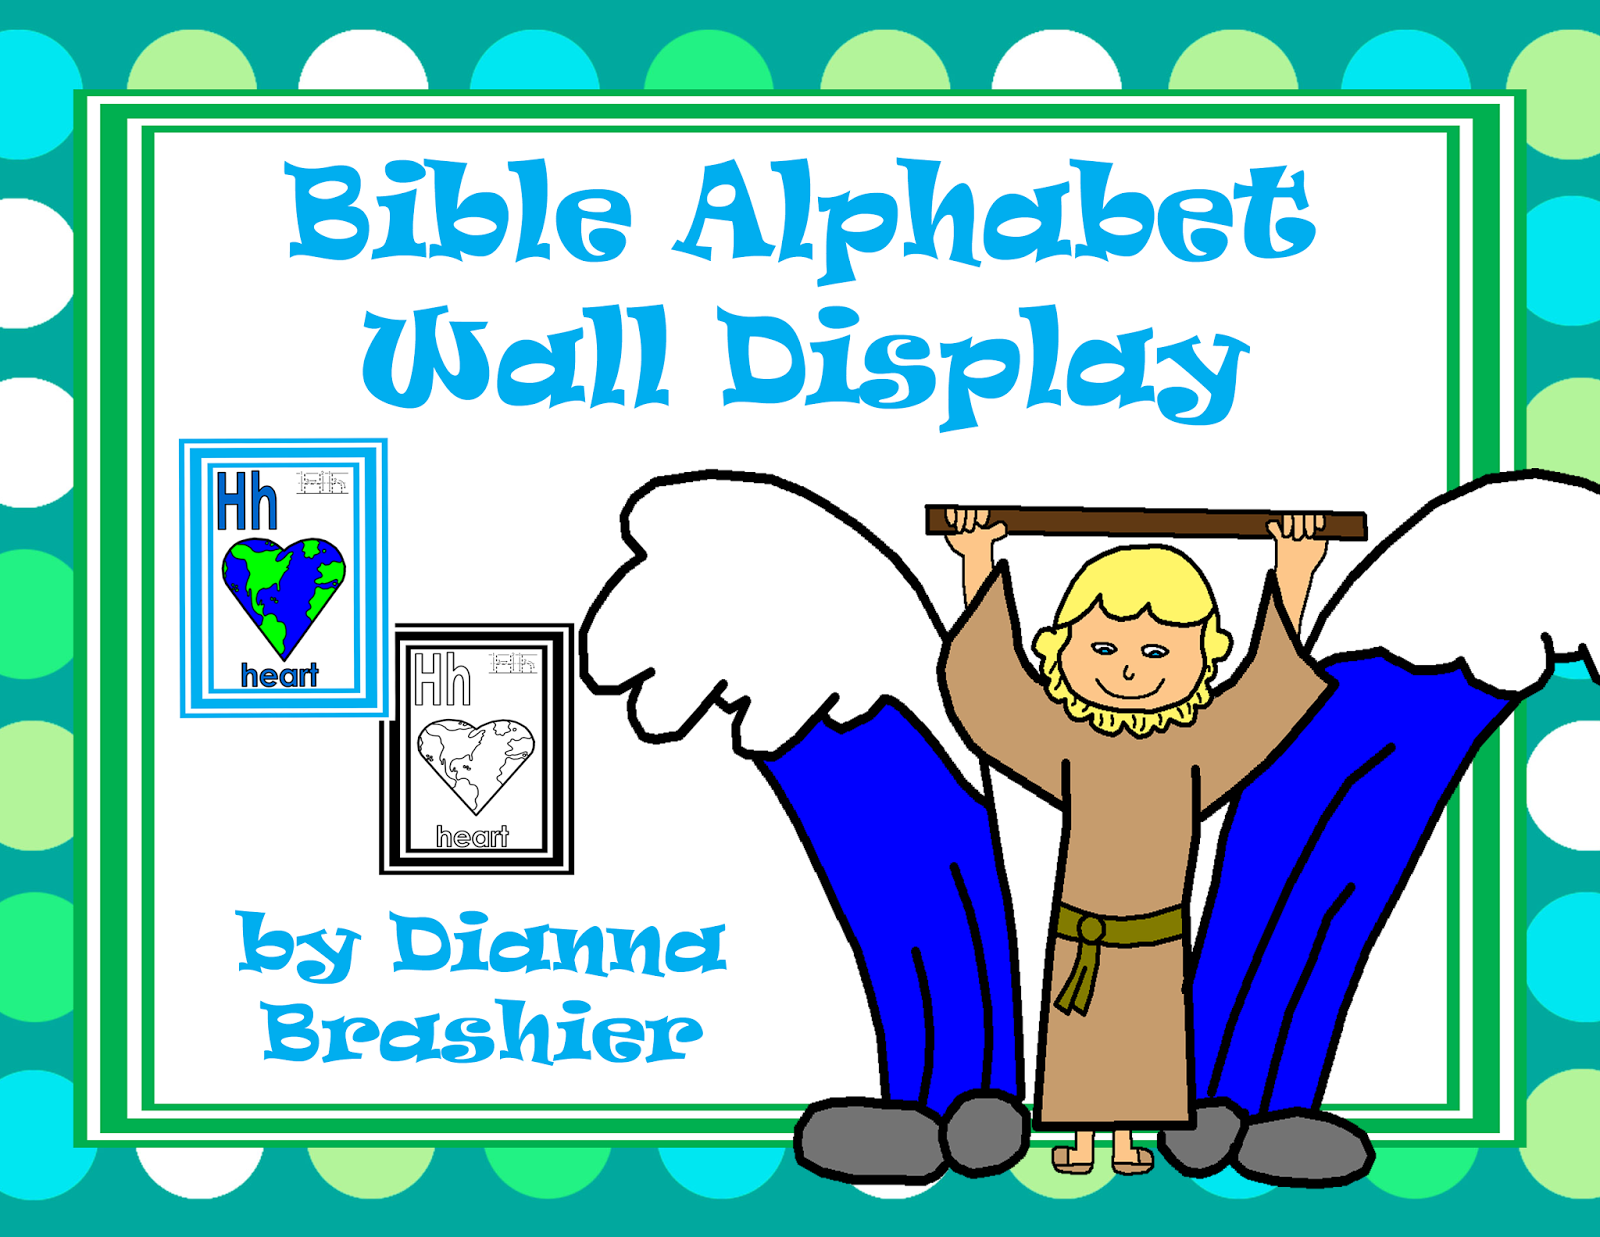 https://www.teacherspayteachers.com/Product/Alphabet-Wall-Display-with-a-Christian-Theme-1766740